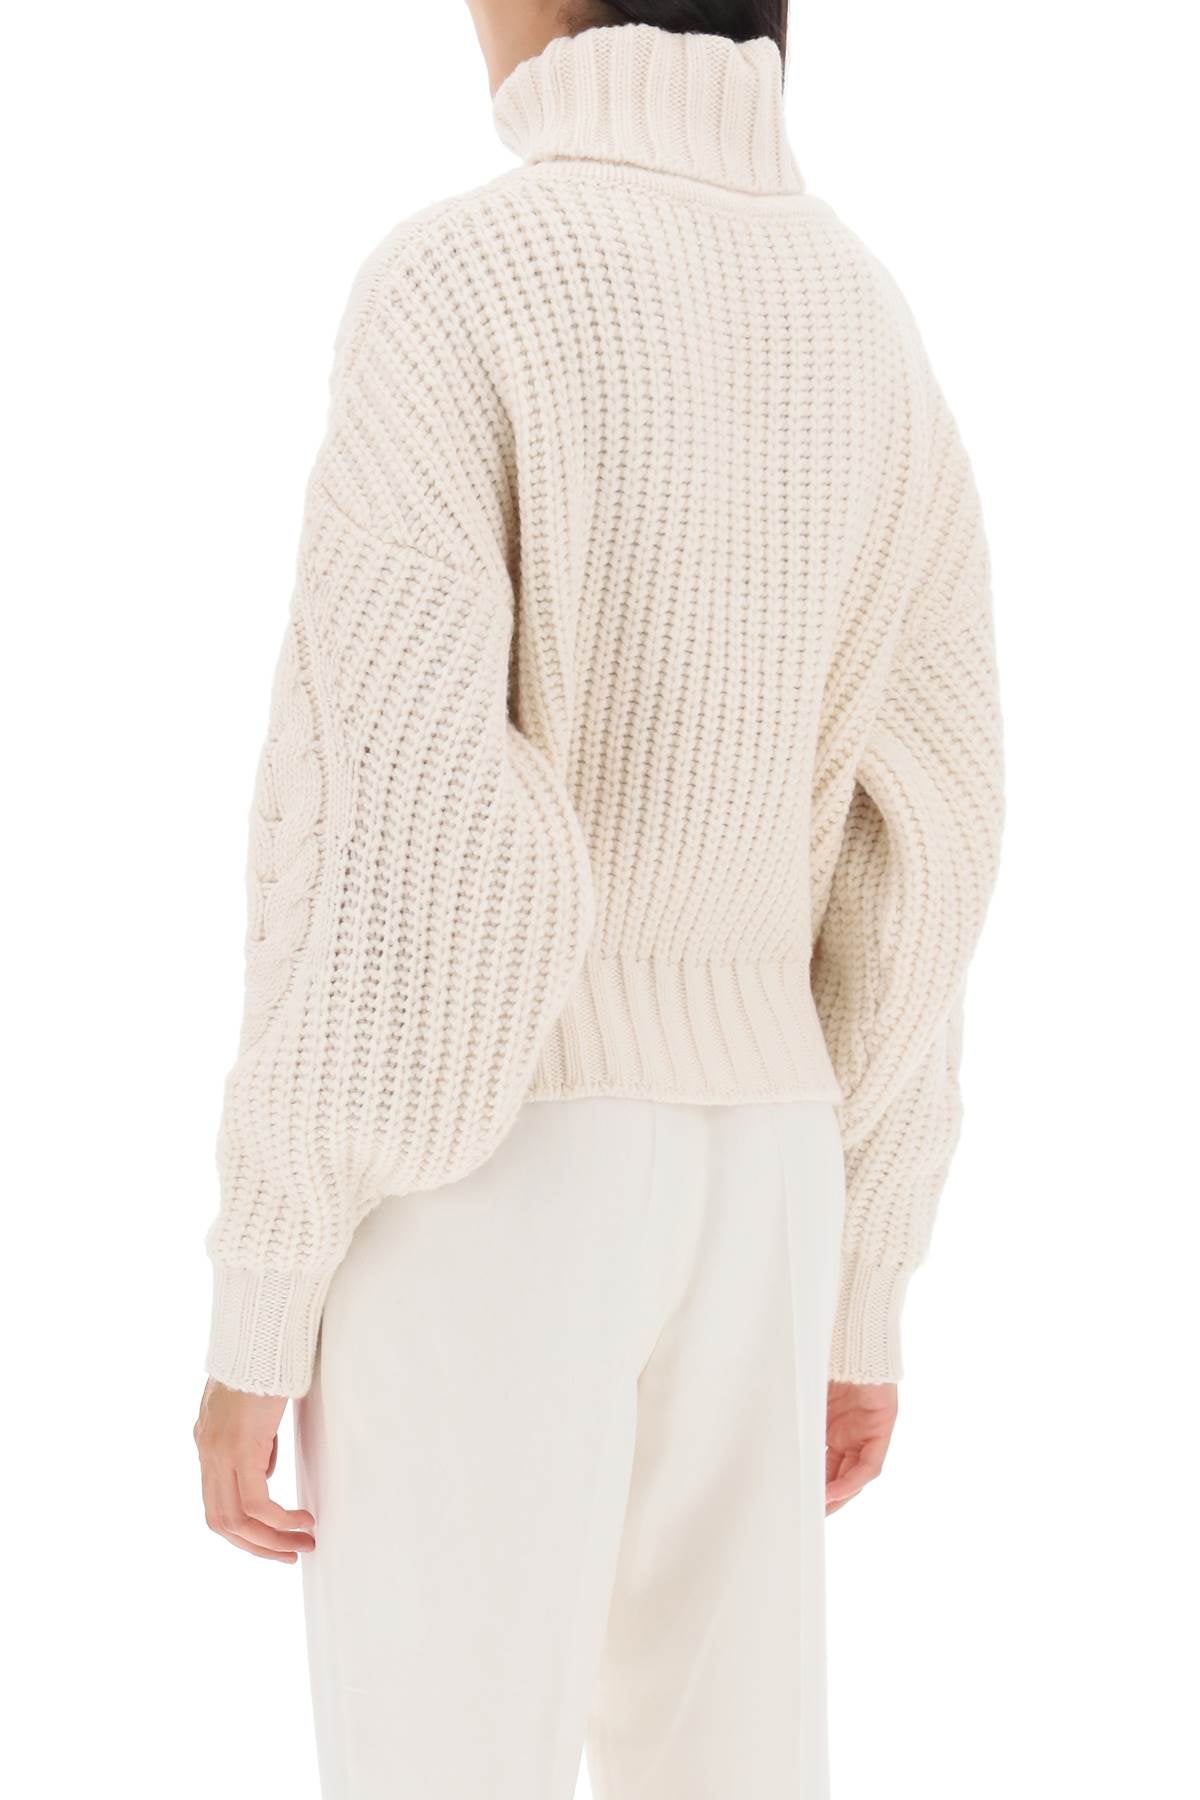 Mvp wardrobe visconti cable knit sweater-2